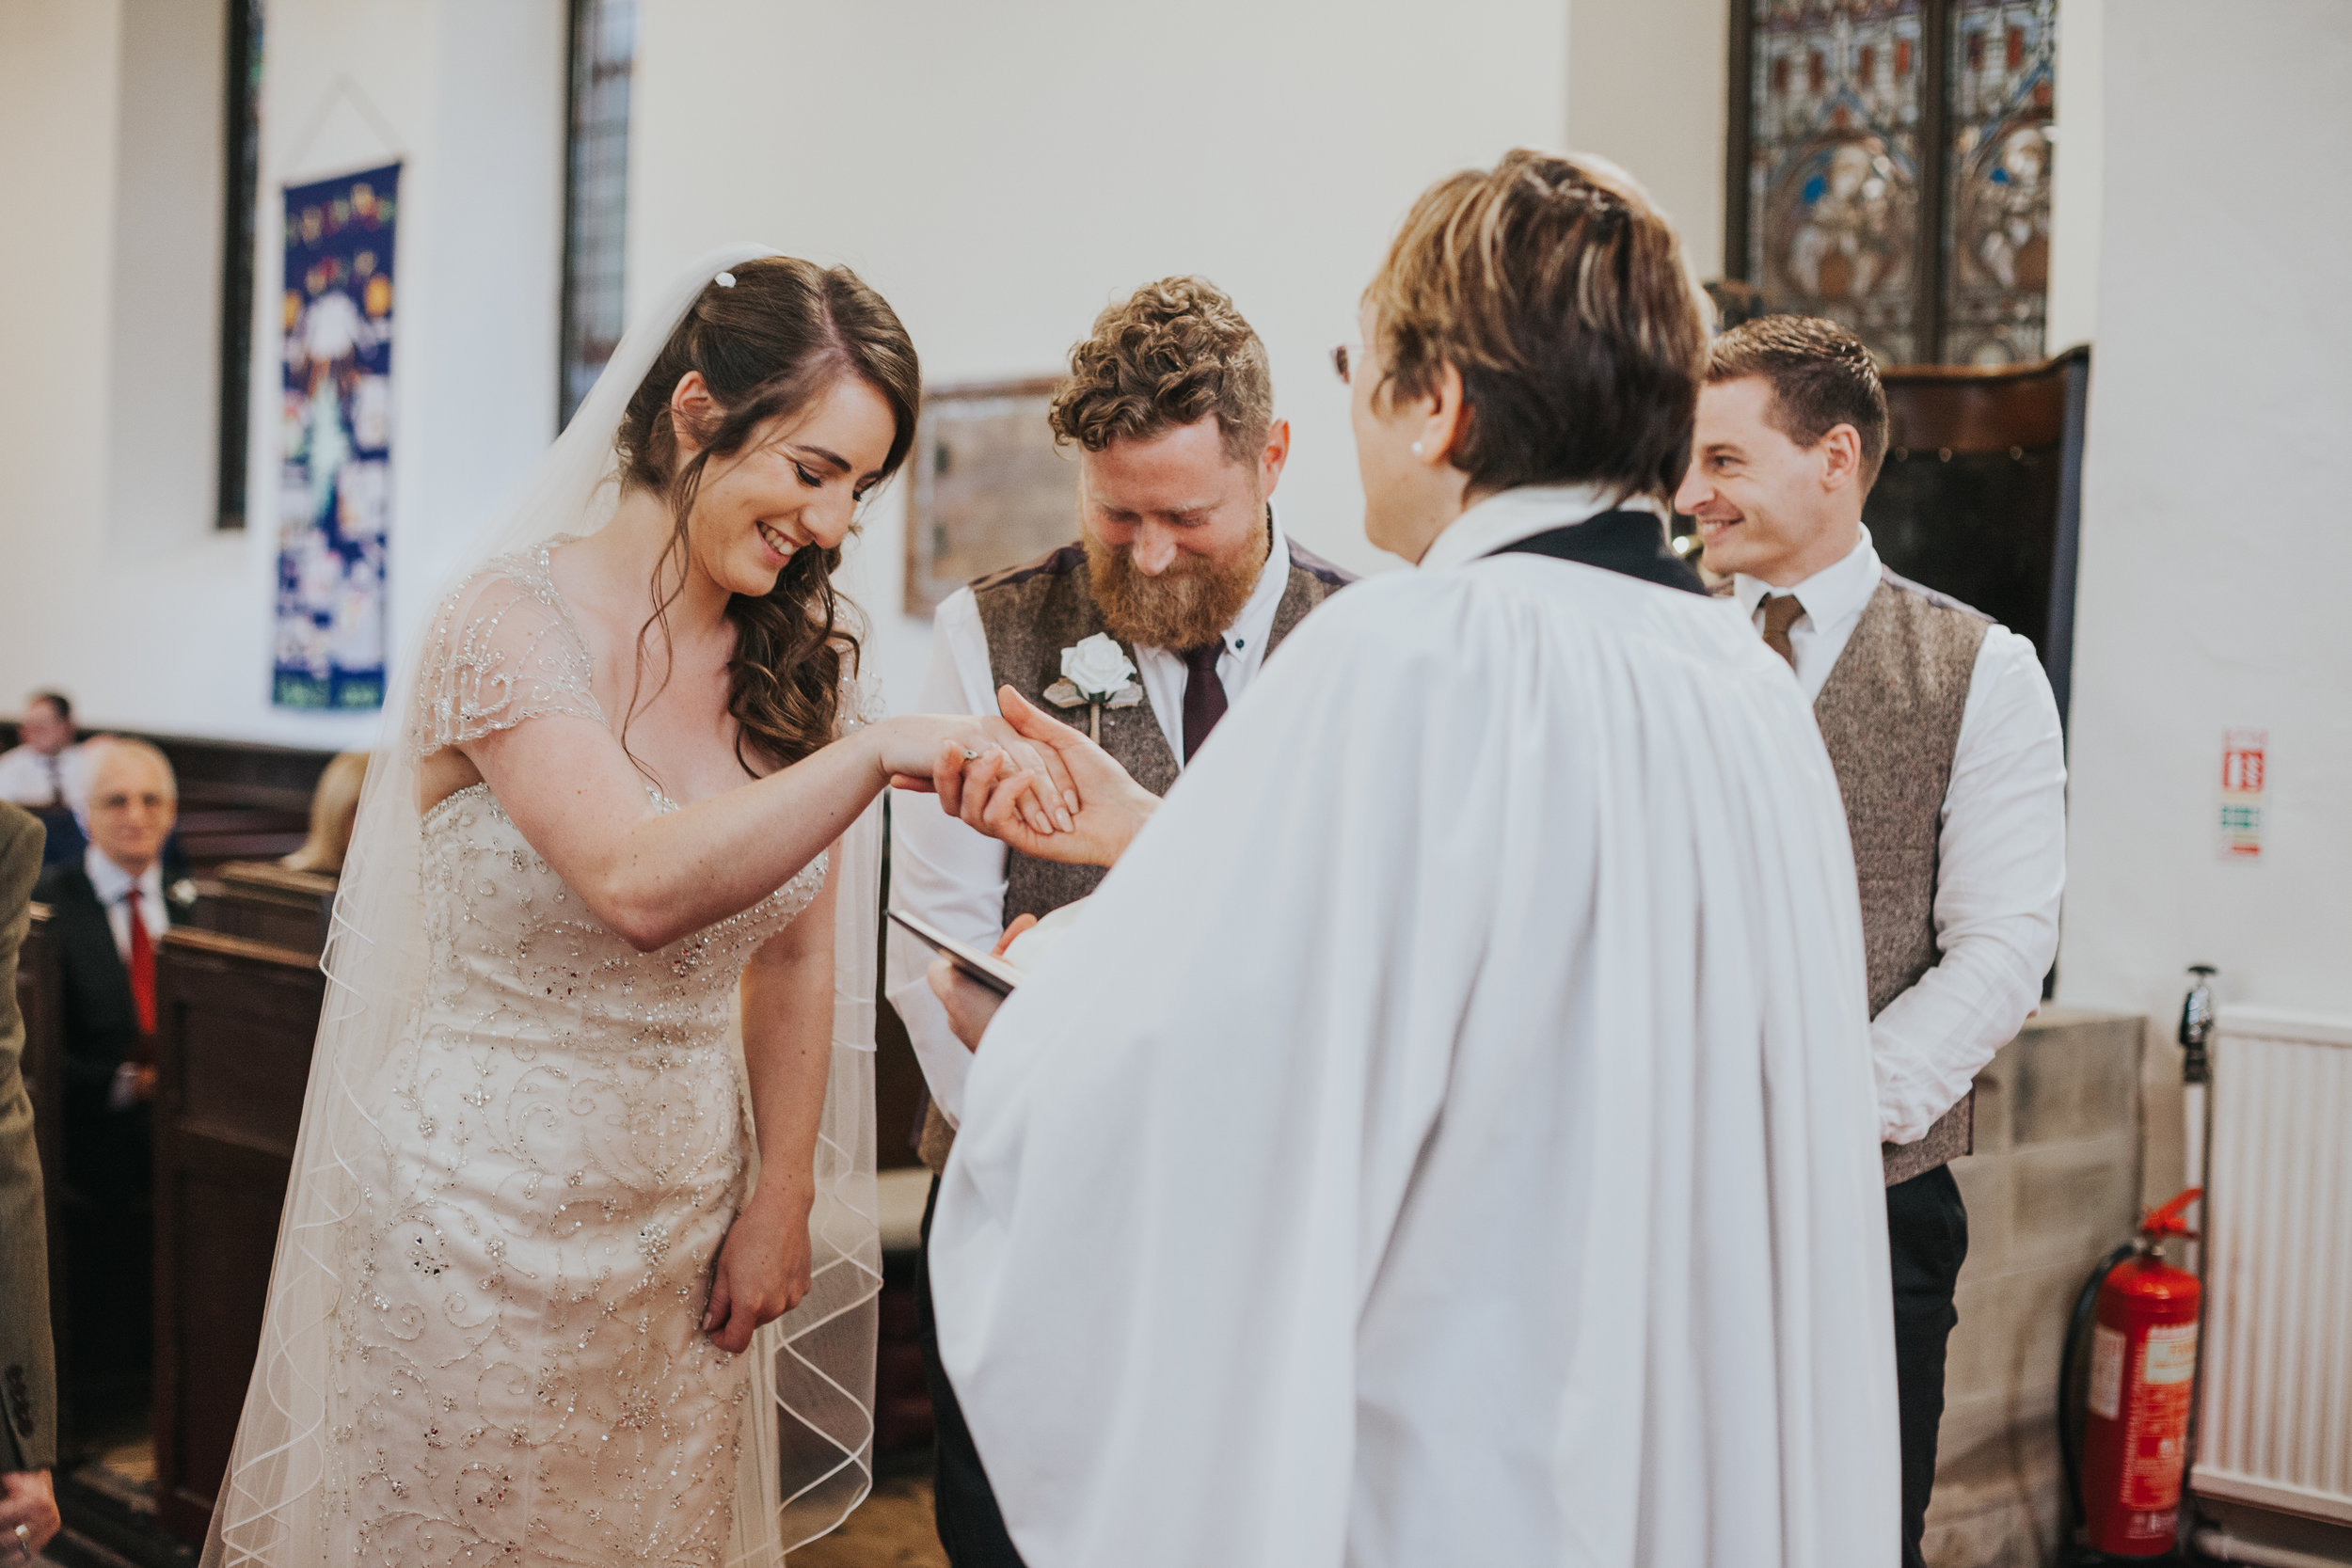  Female vicar holds bride's hand. Bride laughs.&nbsp; 